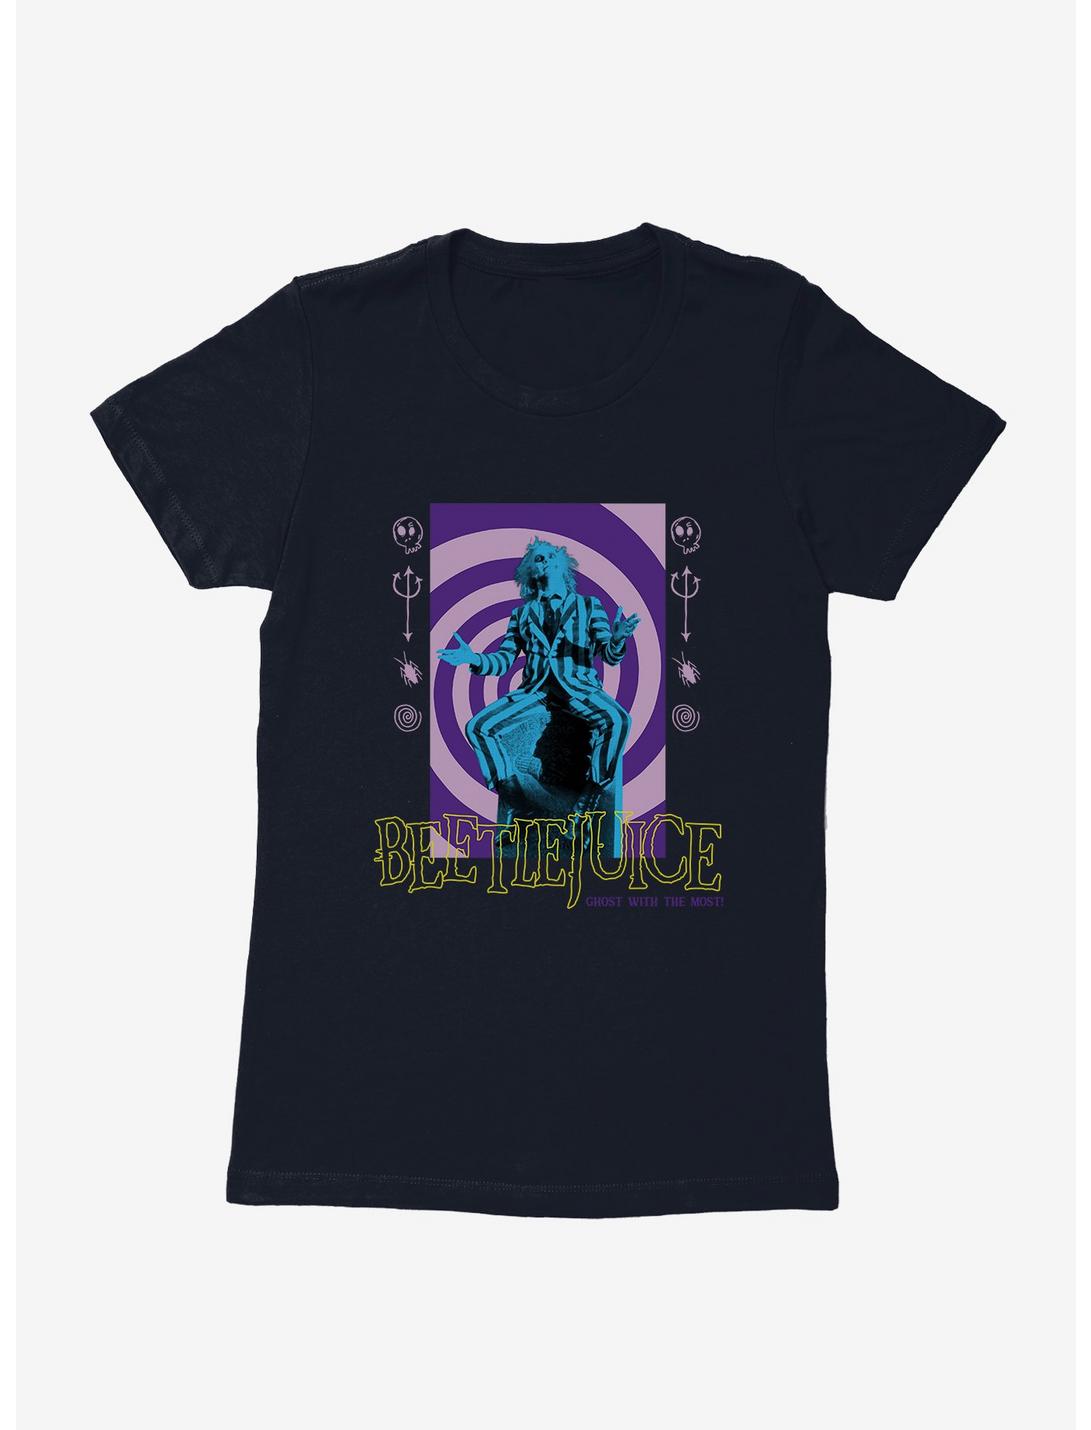 Beetlejuice Swirl Womens T-Shirt, MIDNIGHT NAVY, hi-res